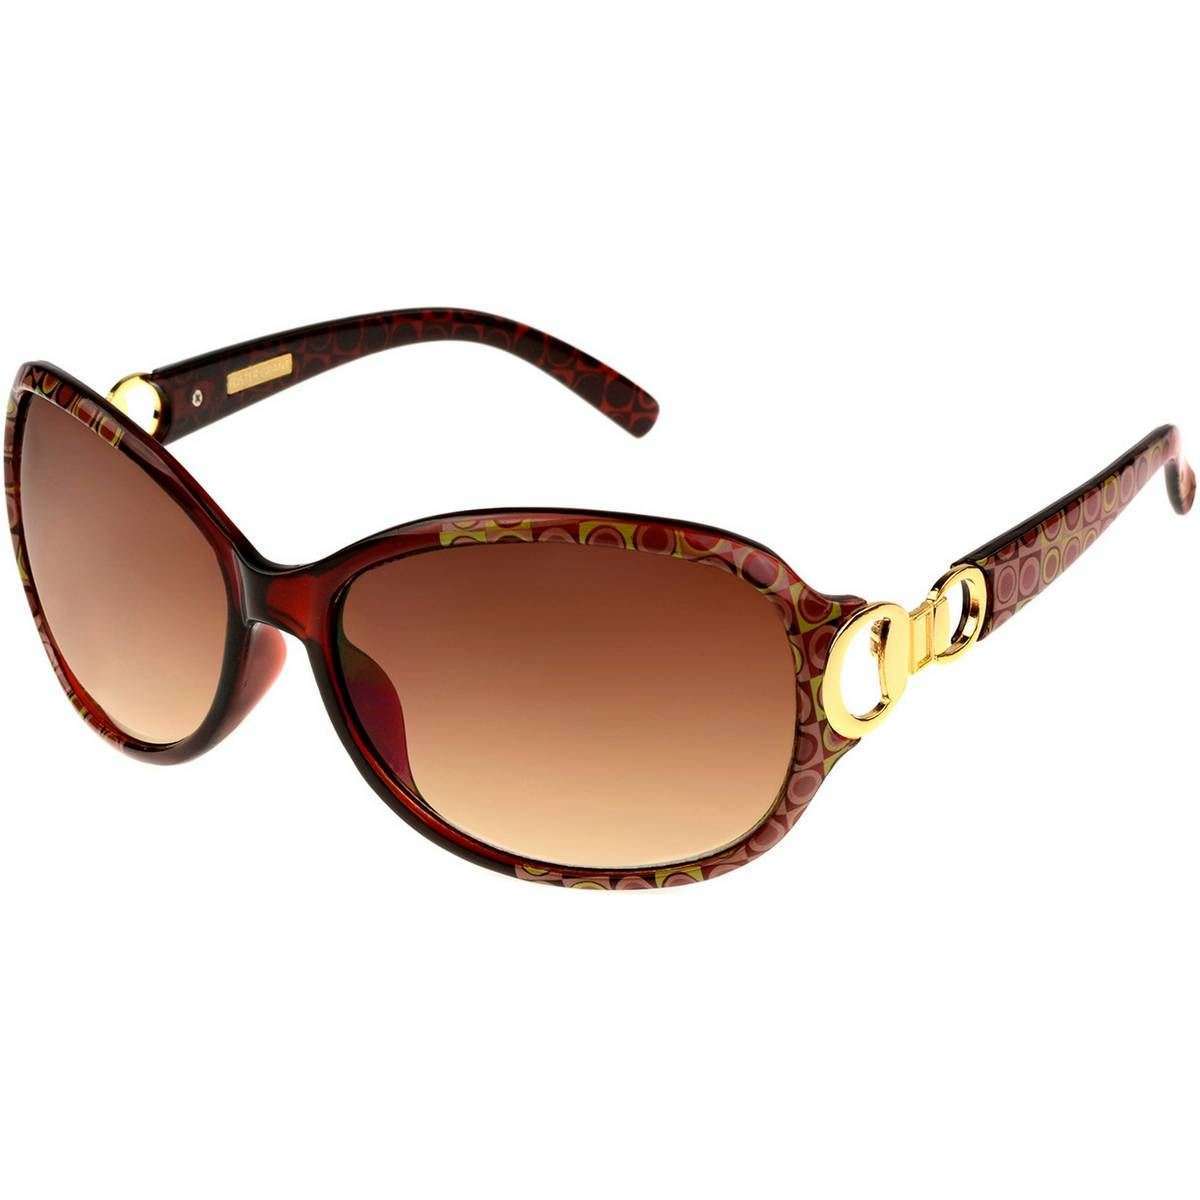 Foster Grant Sunglasses 36659FGX001 - Sunsibility